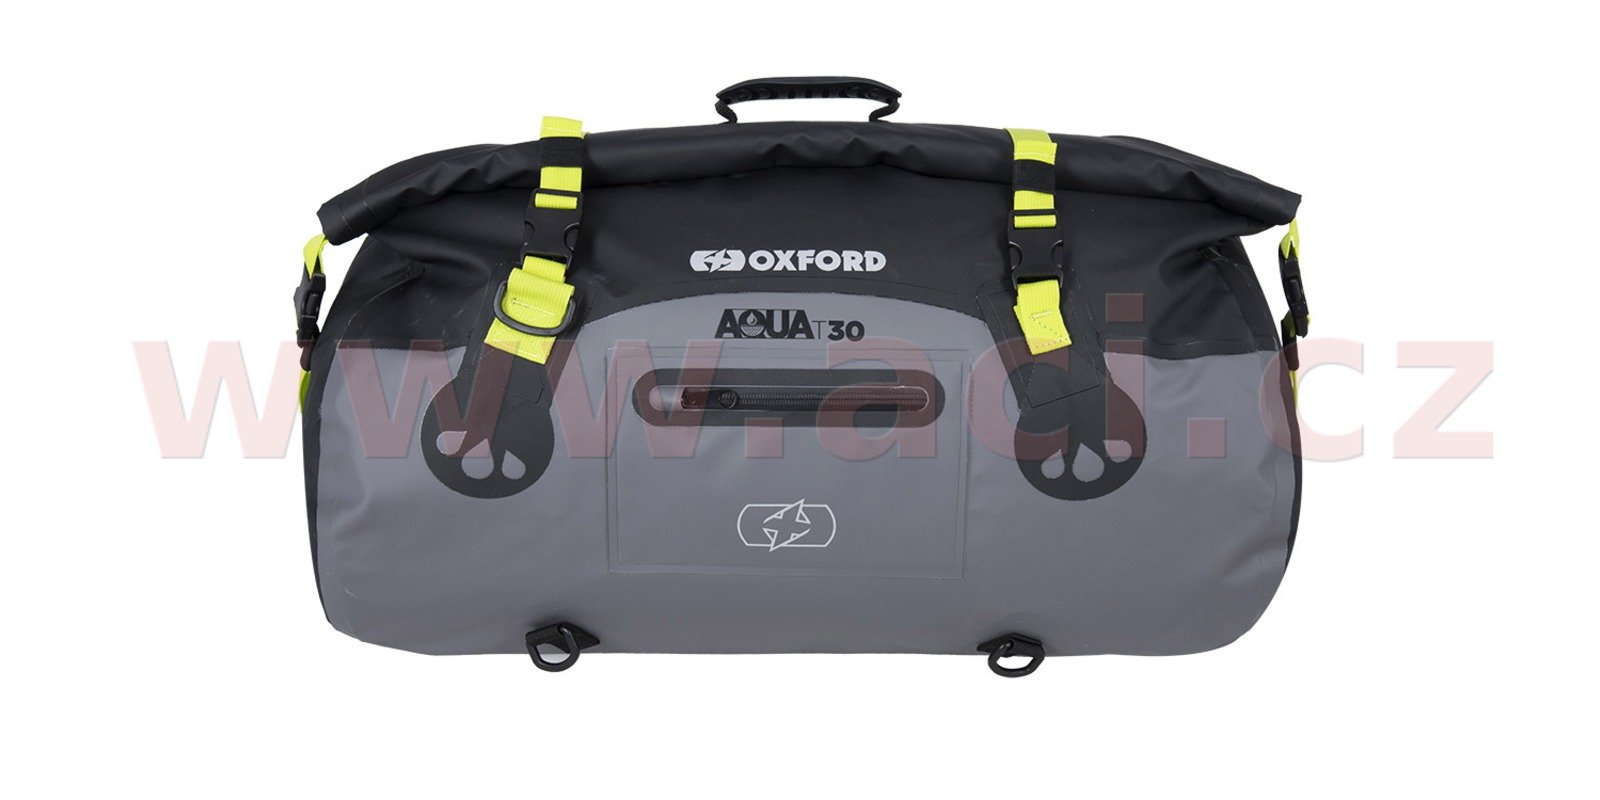 Obrázek produktu vodotěsný vak Aqua T-30 Roll Bag, OXFORD (černý/šedý/žlutý fluo, objem 30 l) OL461